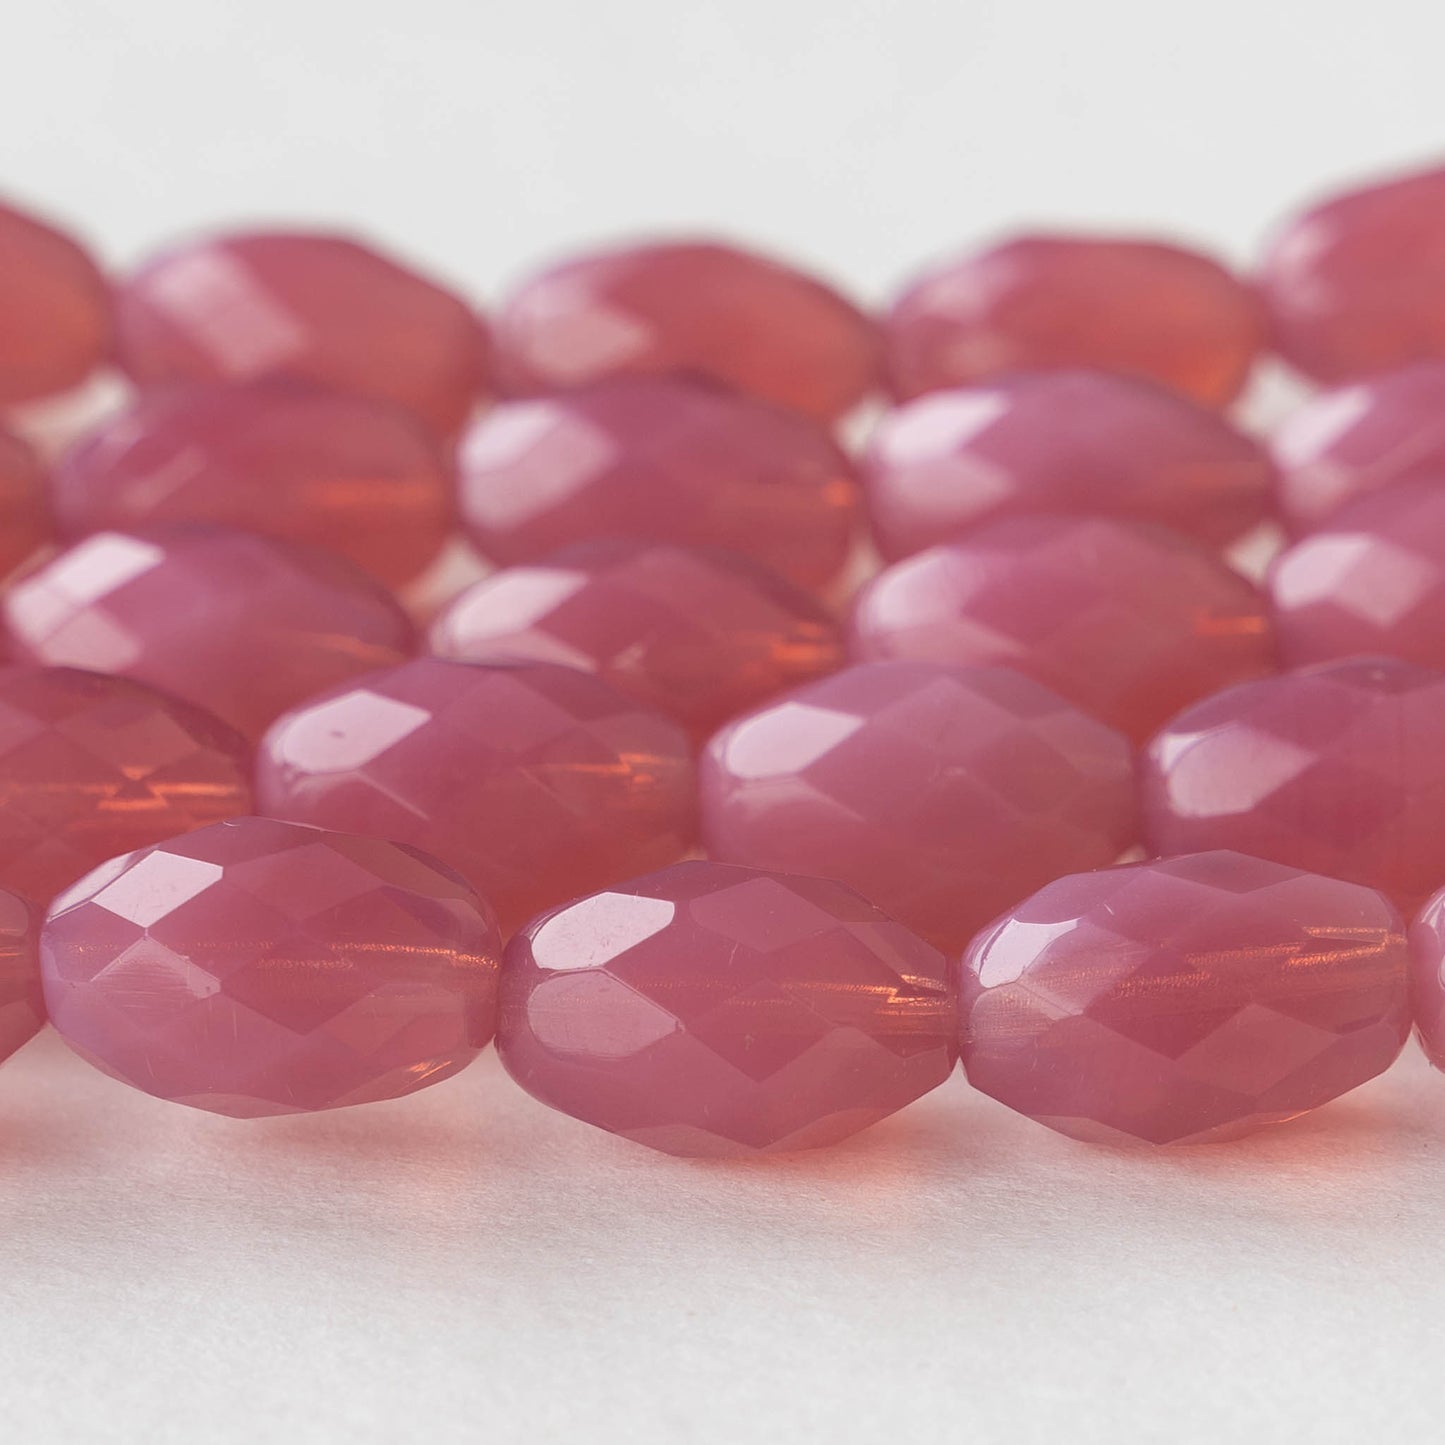 10x15mm Firepolished Glass Oval Beads - Pink Opaline - 4 Beads